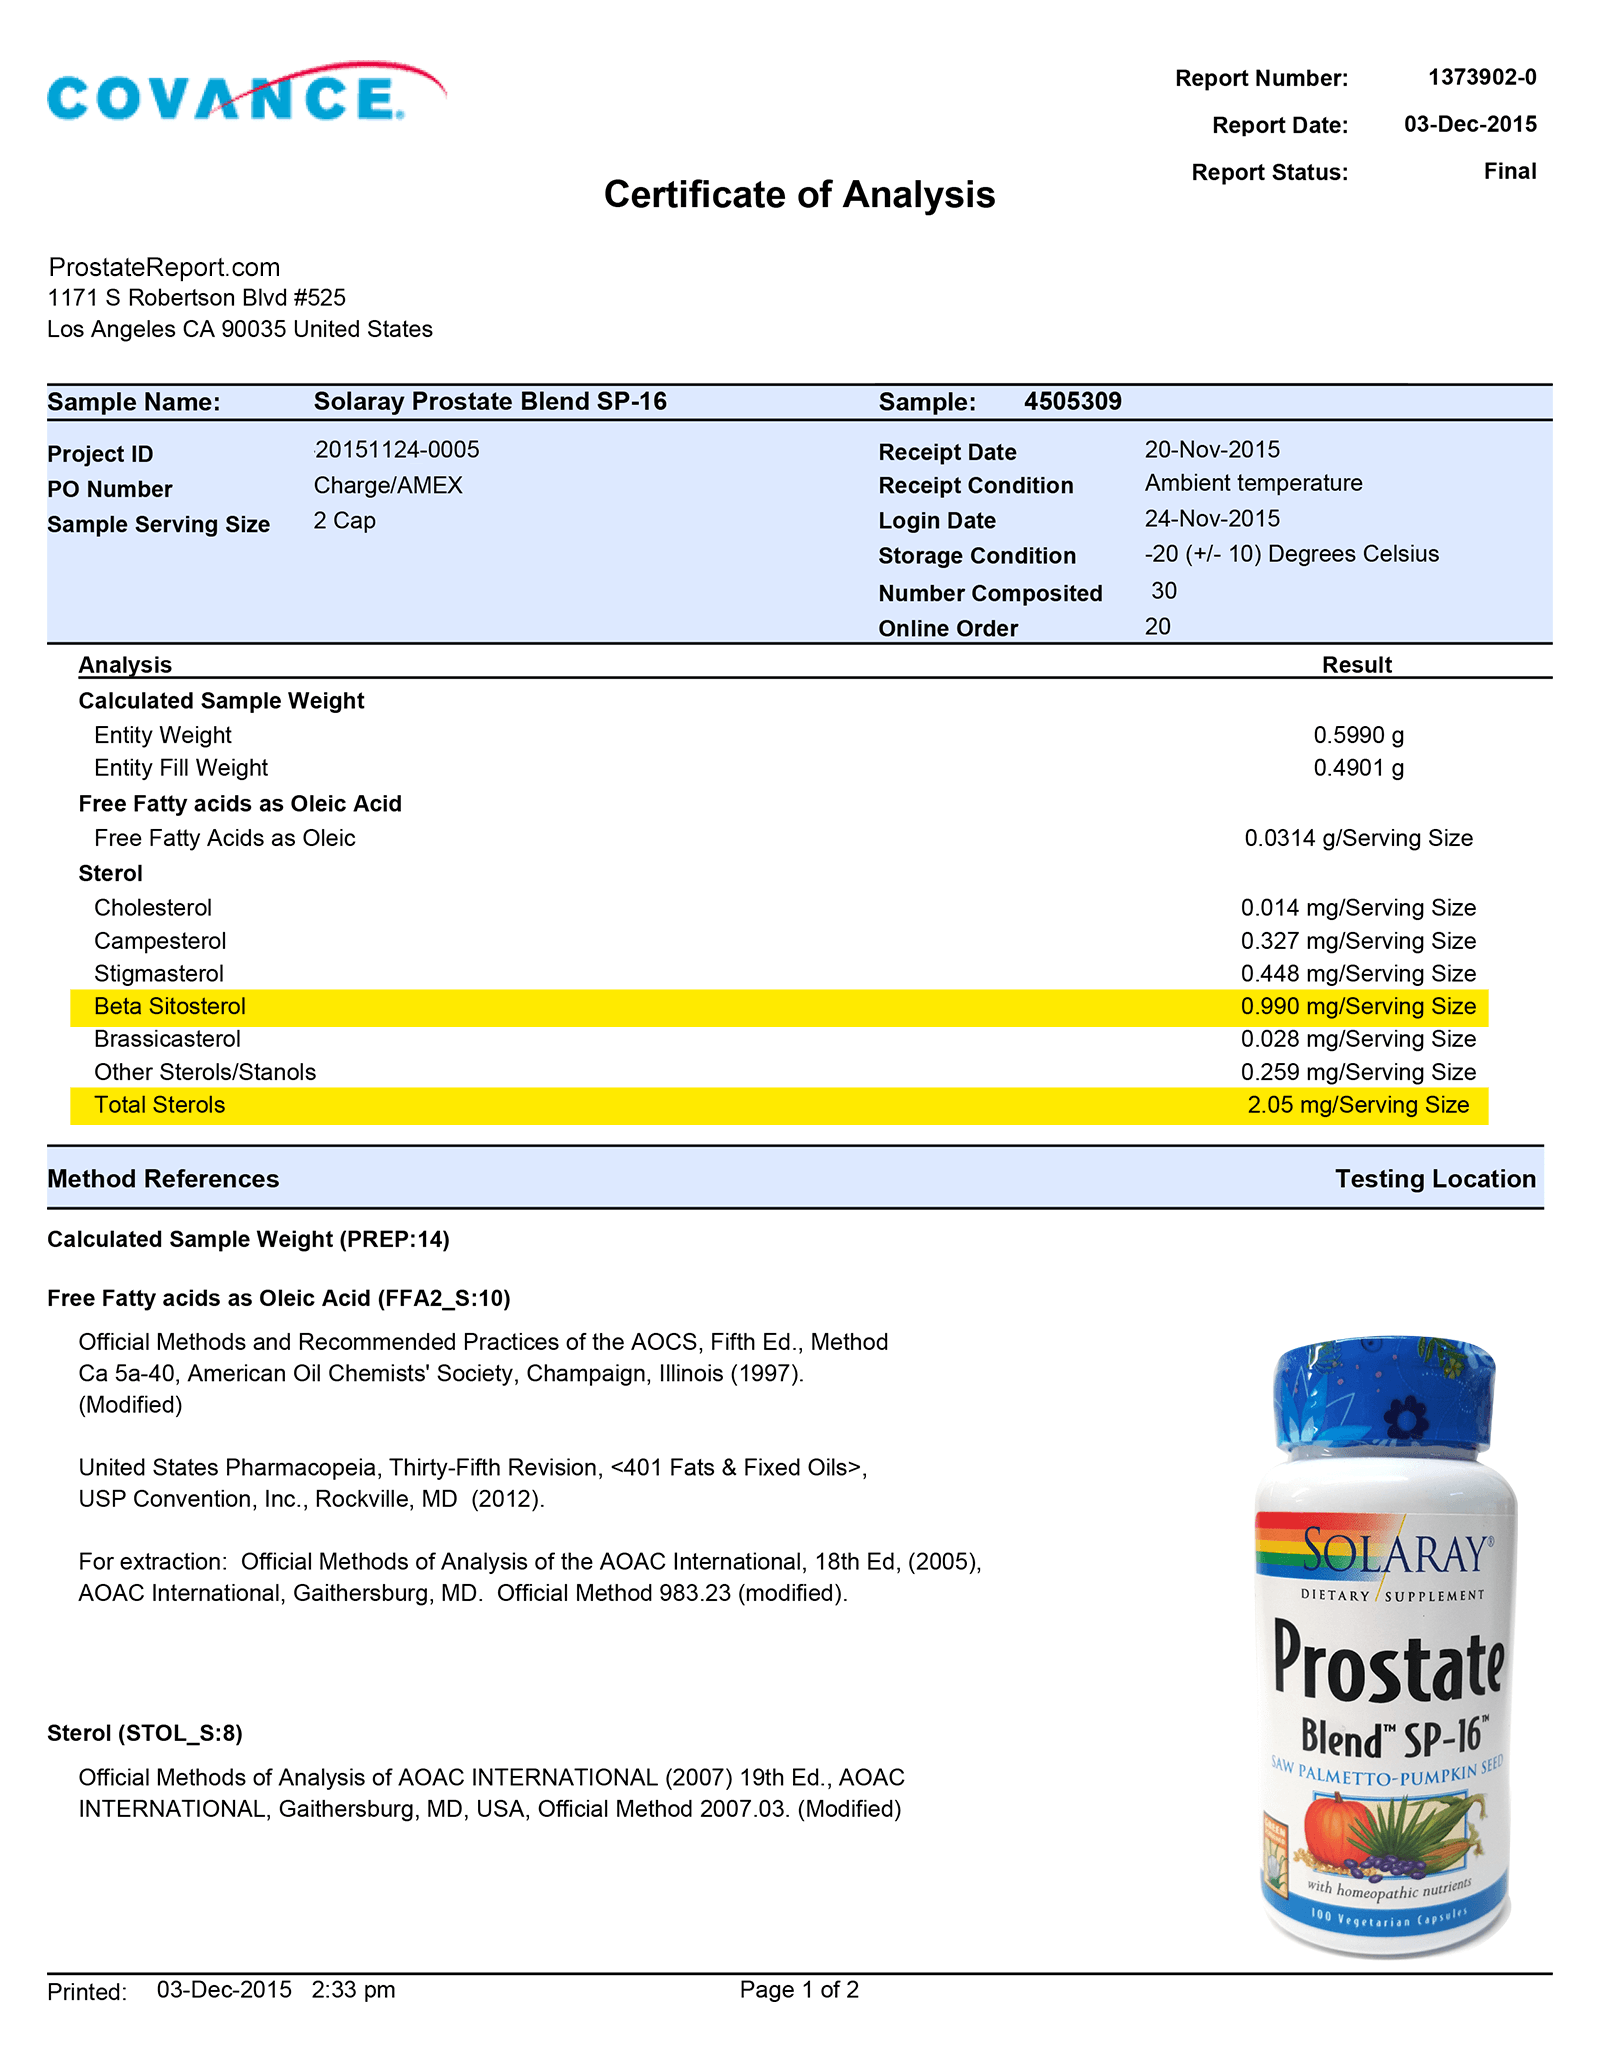 Prostate Blend SP-16 lab report 